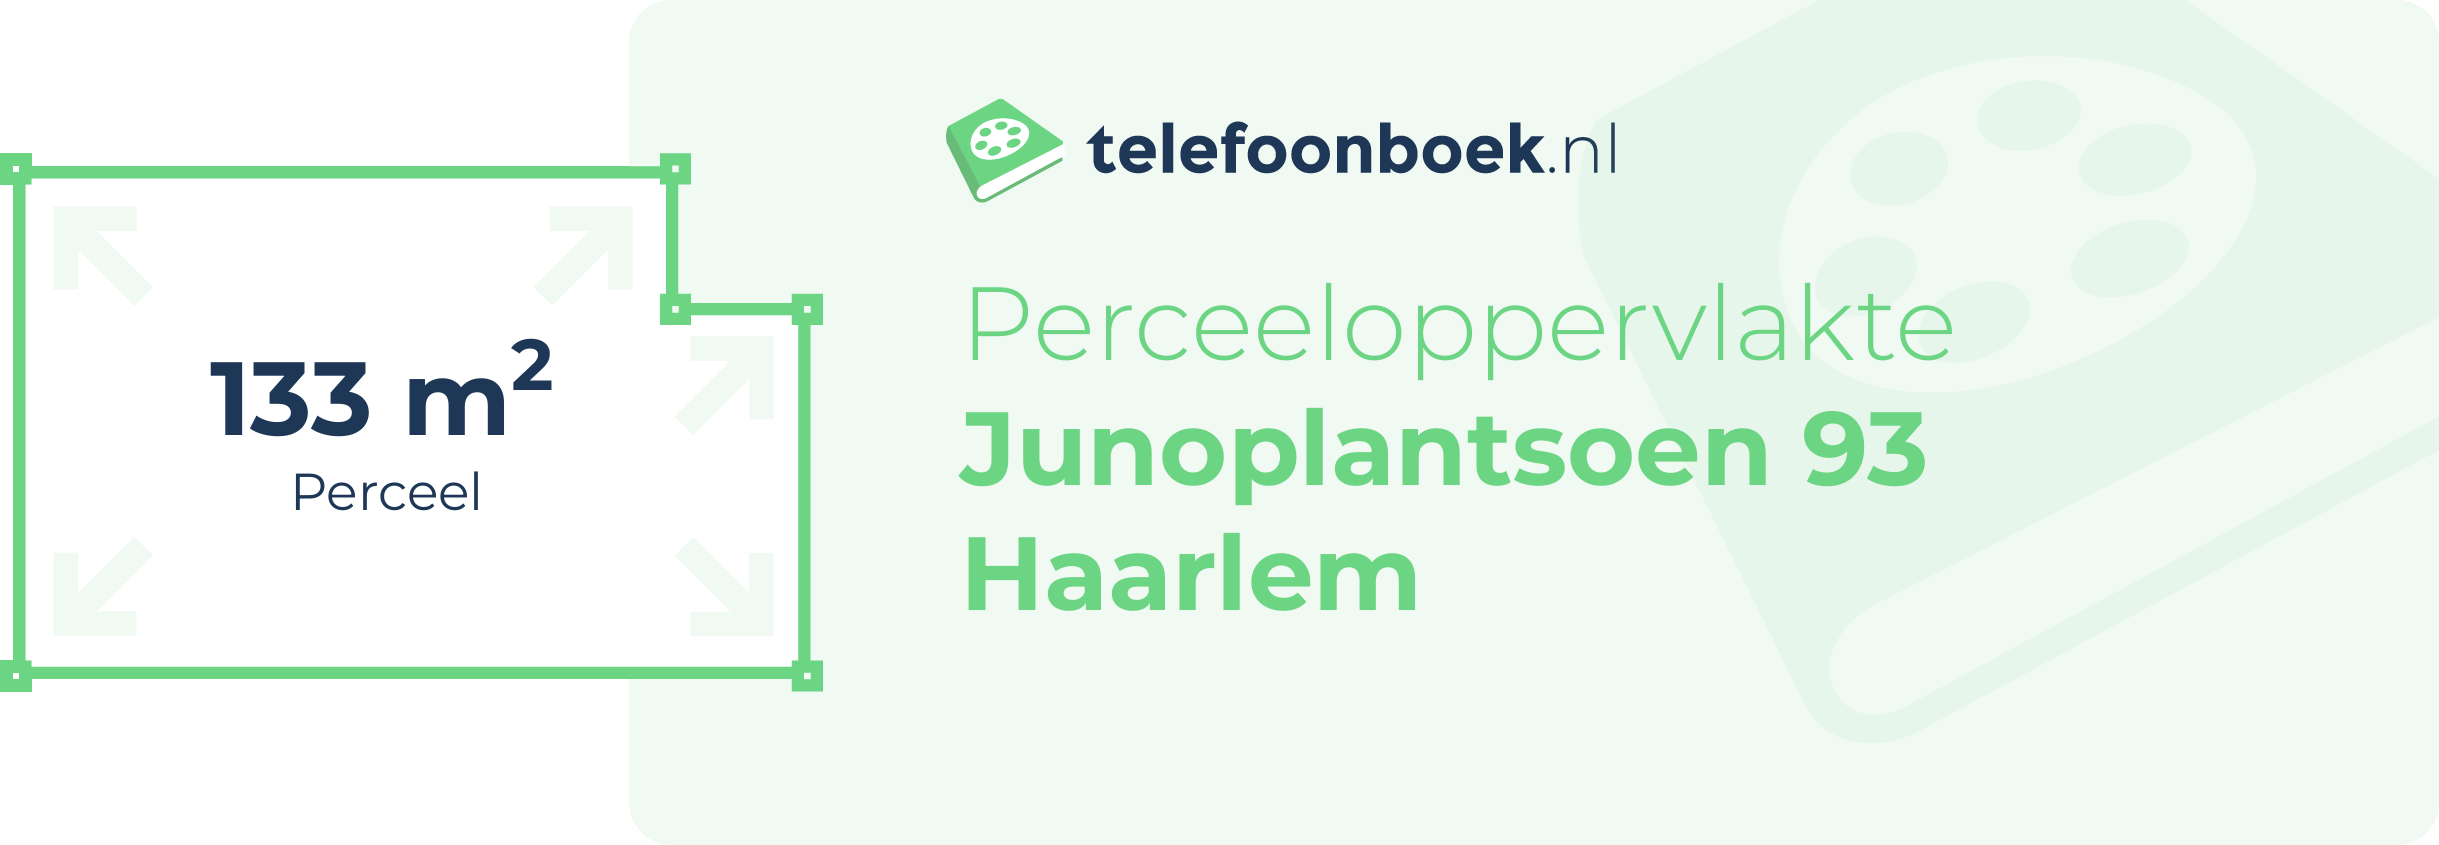 Perceeloppervlakte Junoplantsoen 93 Haarlem